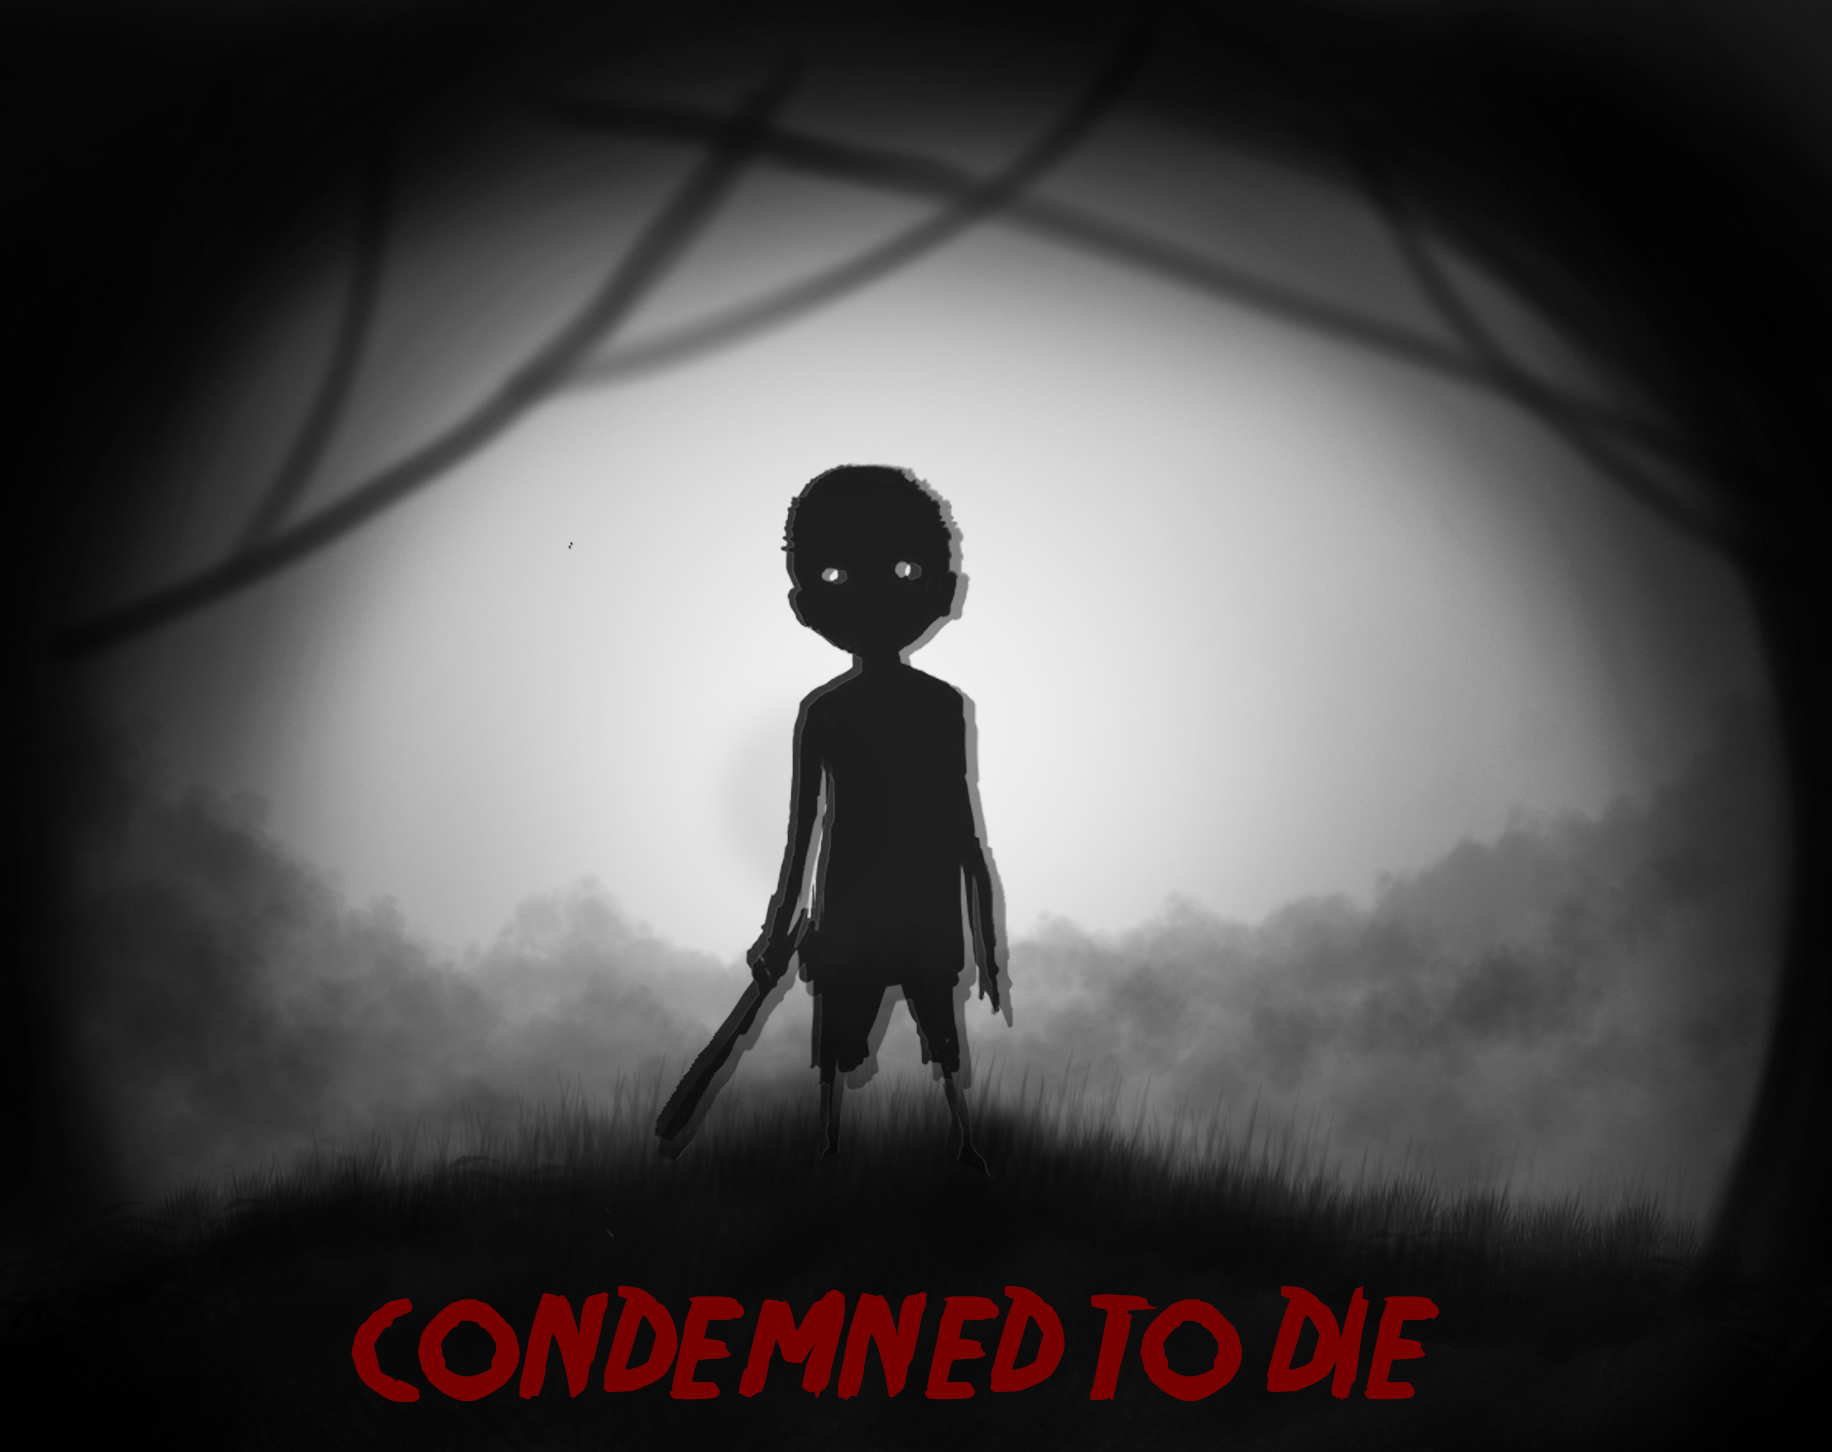 Condemned to Die